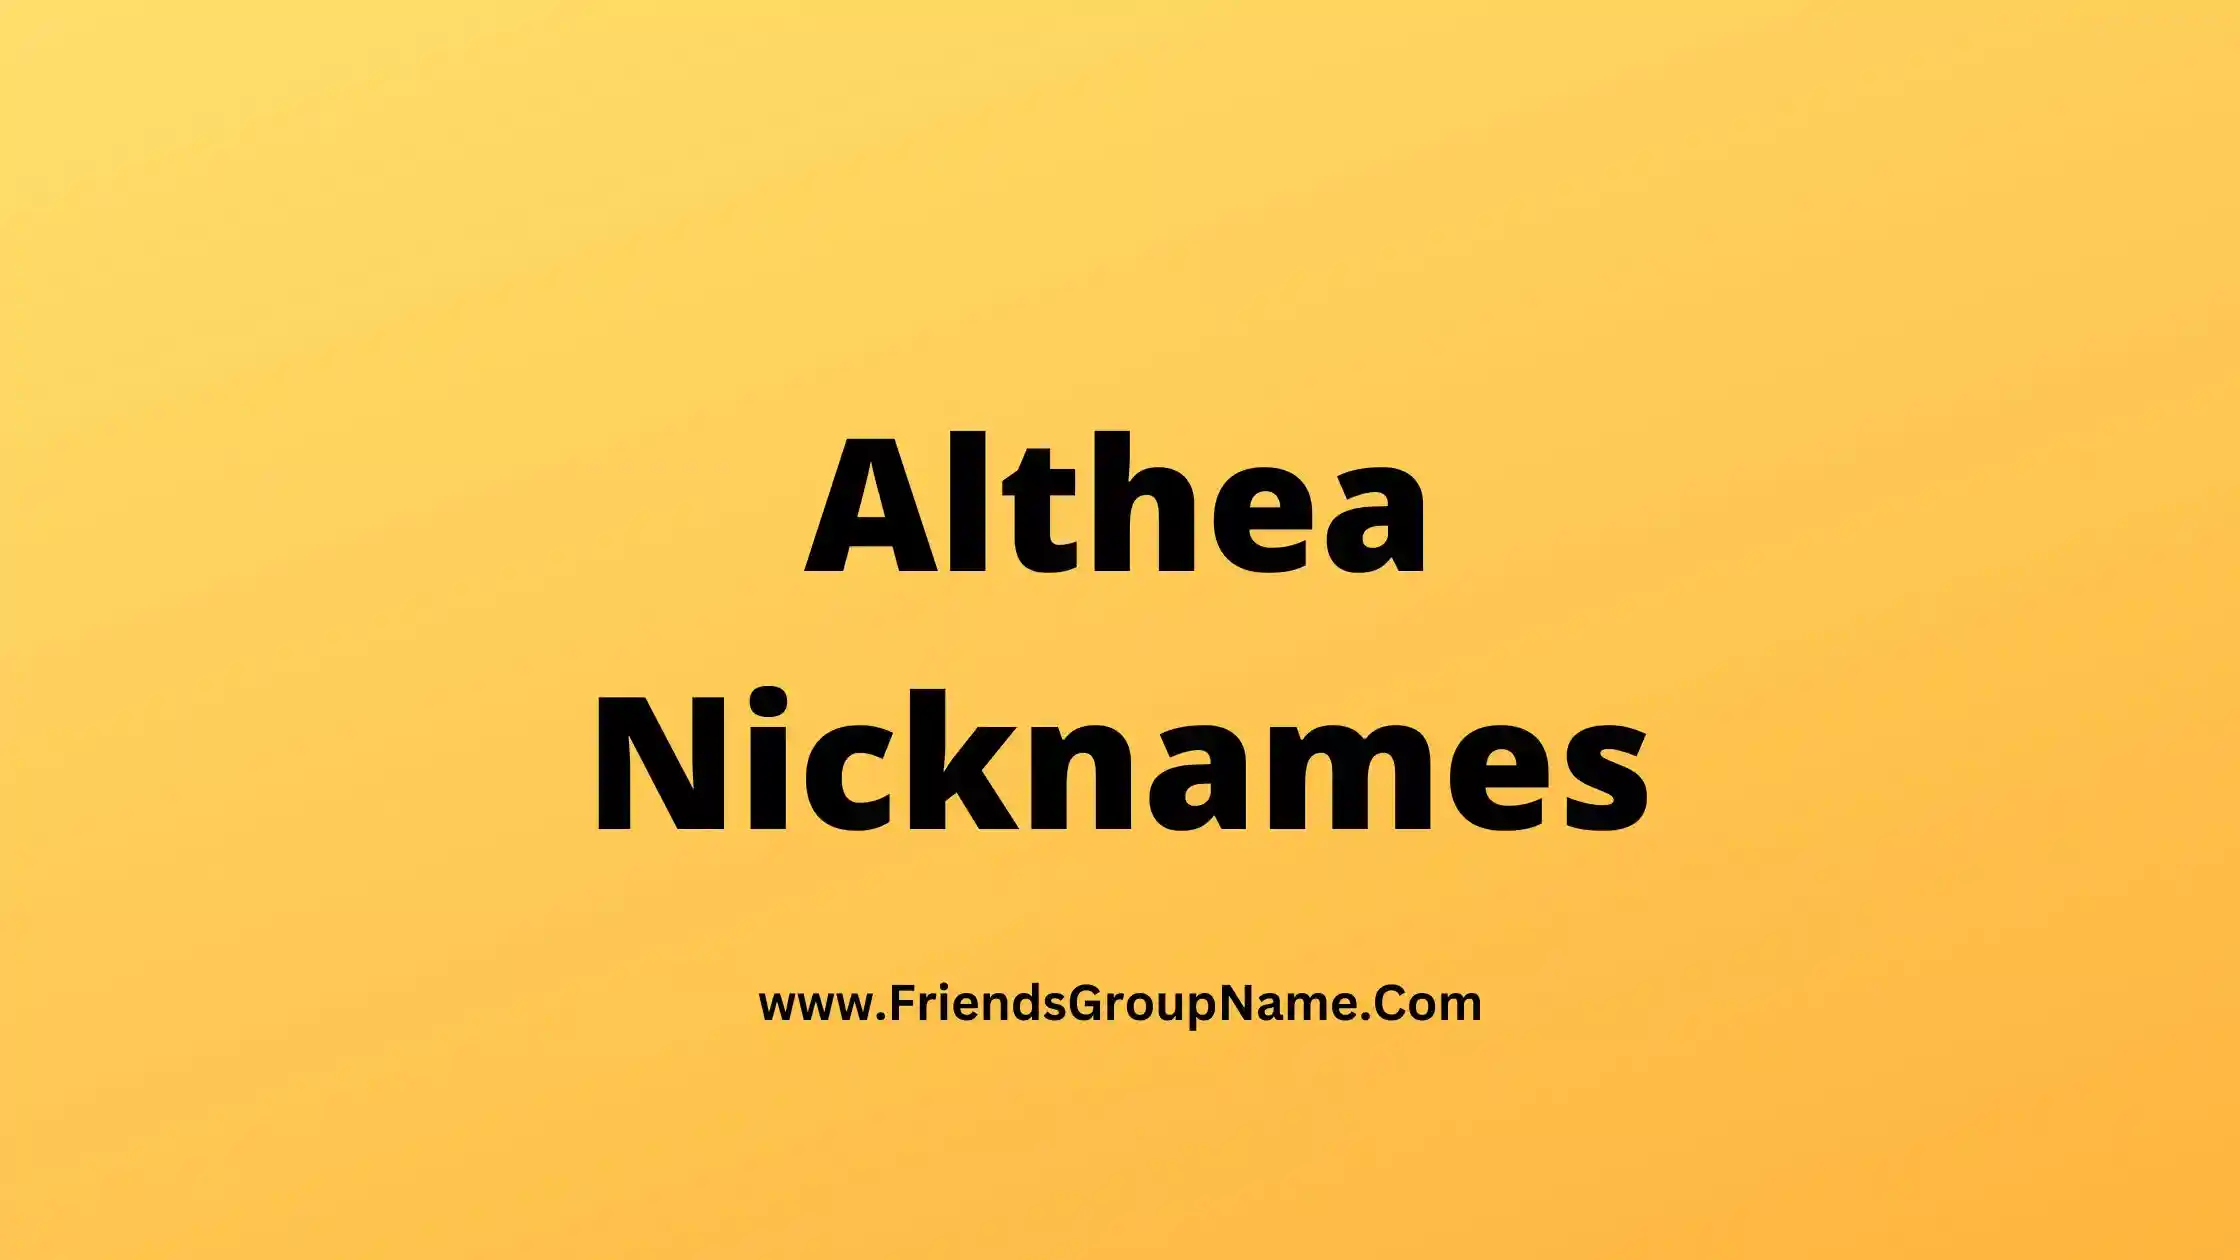 Althea Nicknames